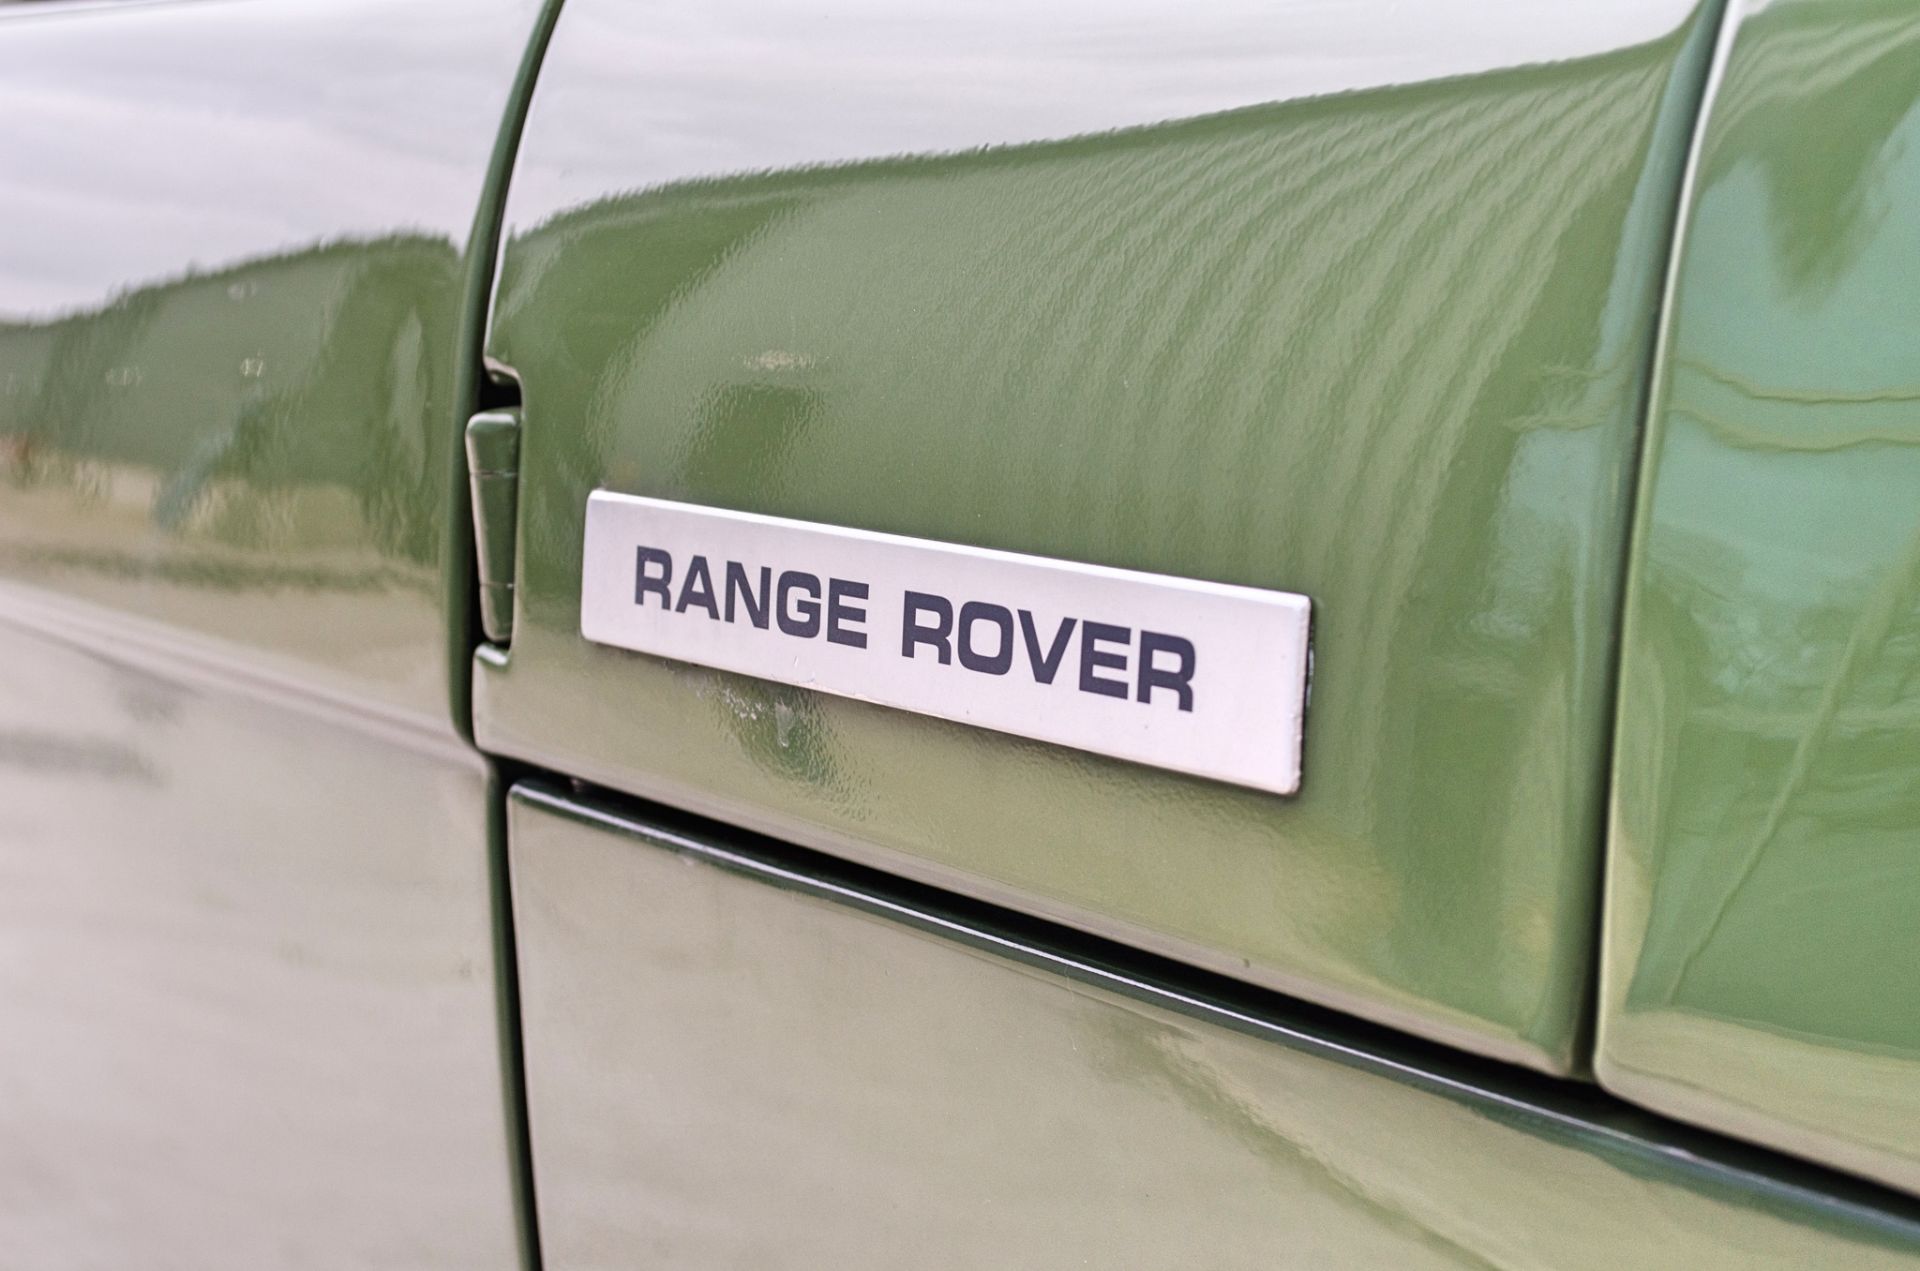 1975 Land Rover Range Rover Classic 3470 cc 3 door 4 wheel drive - Image 50 of 55